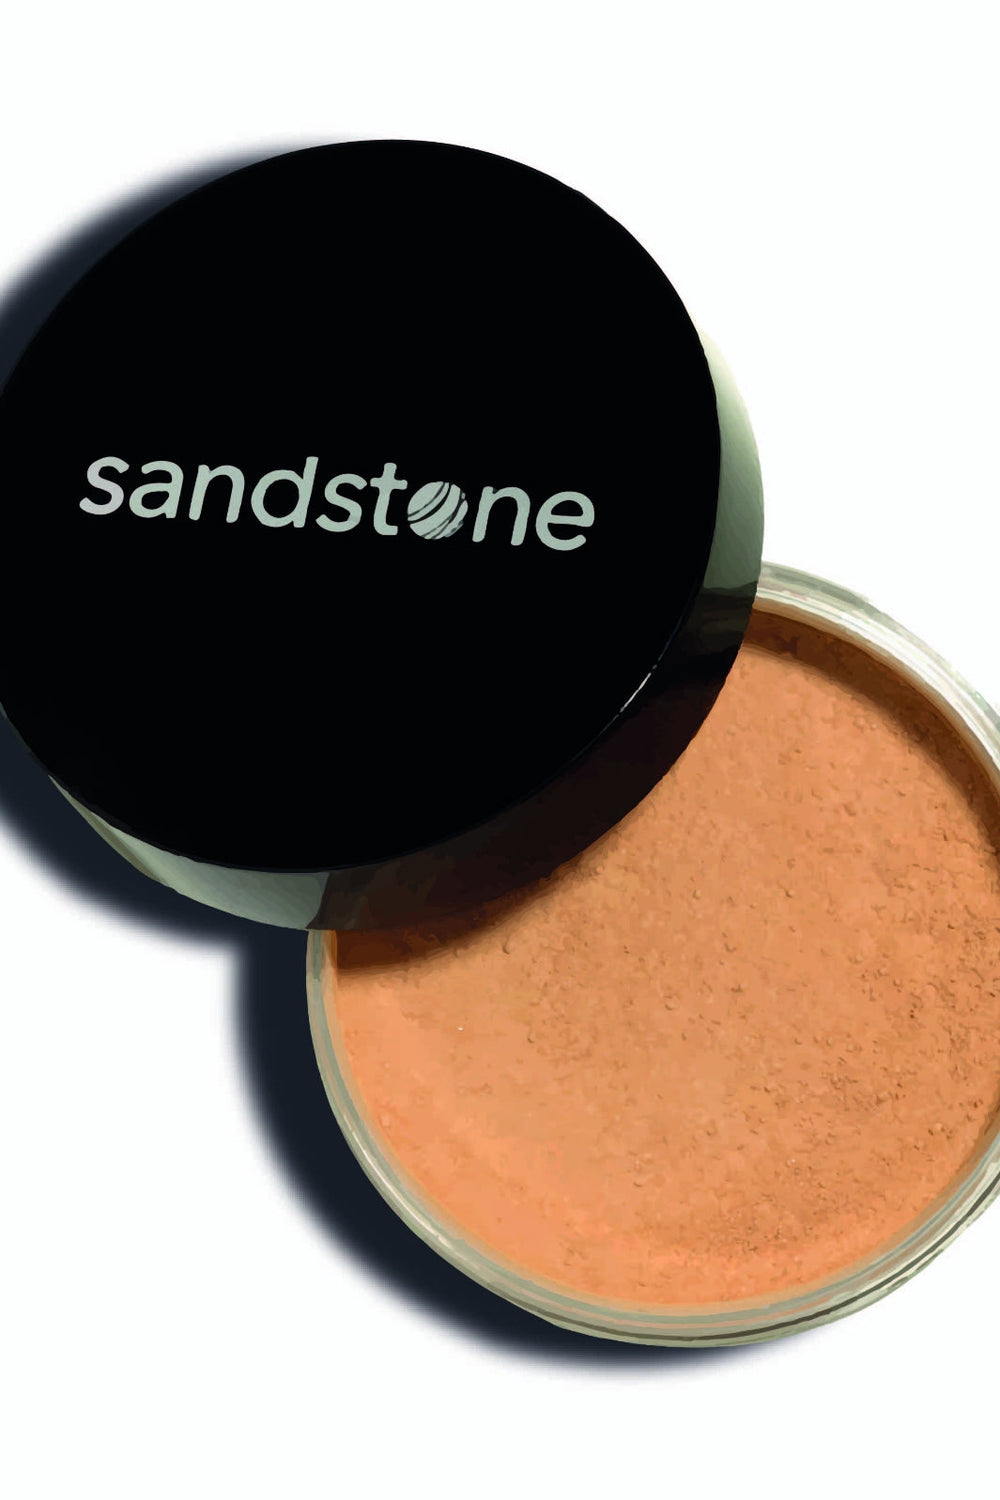 Sandstone - Velvet Skin Mineral Powder - 04 Medium Makeup 